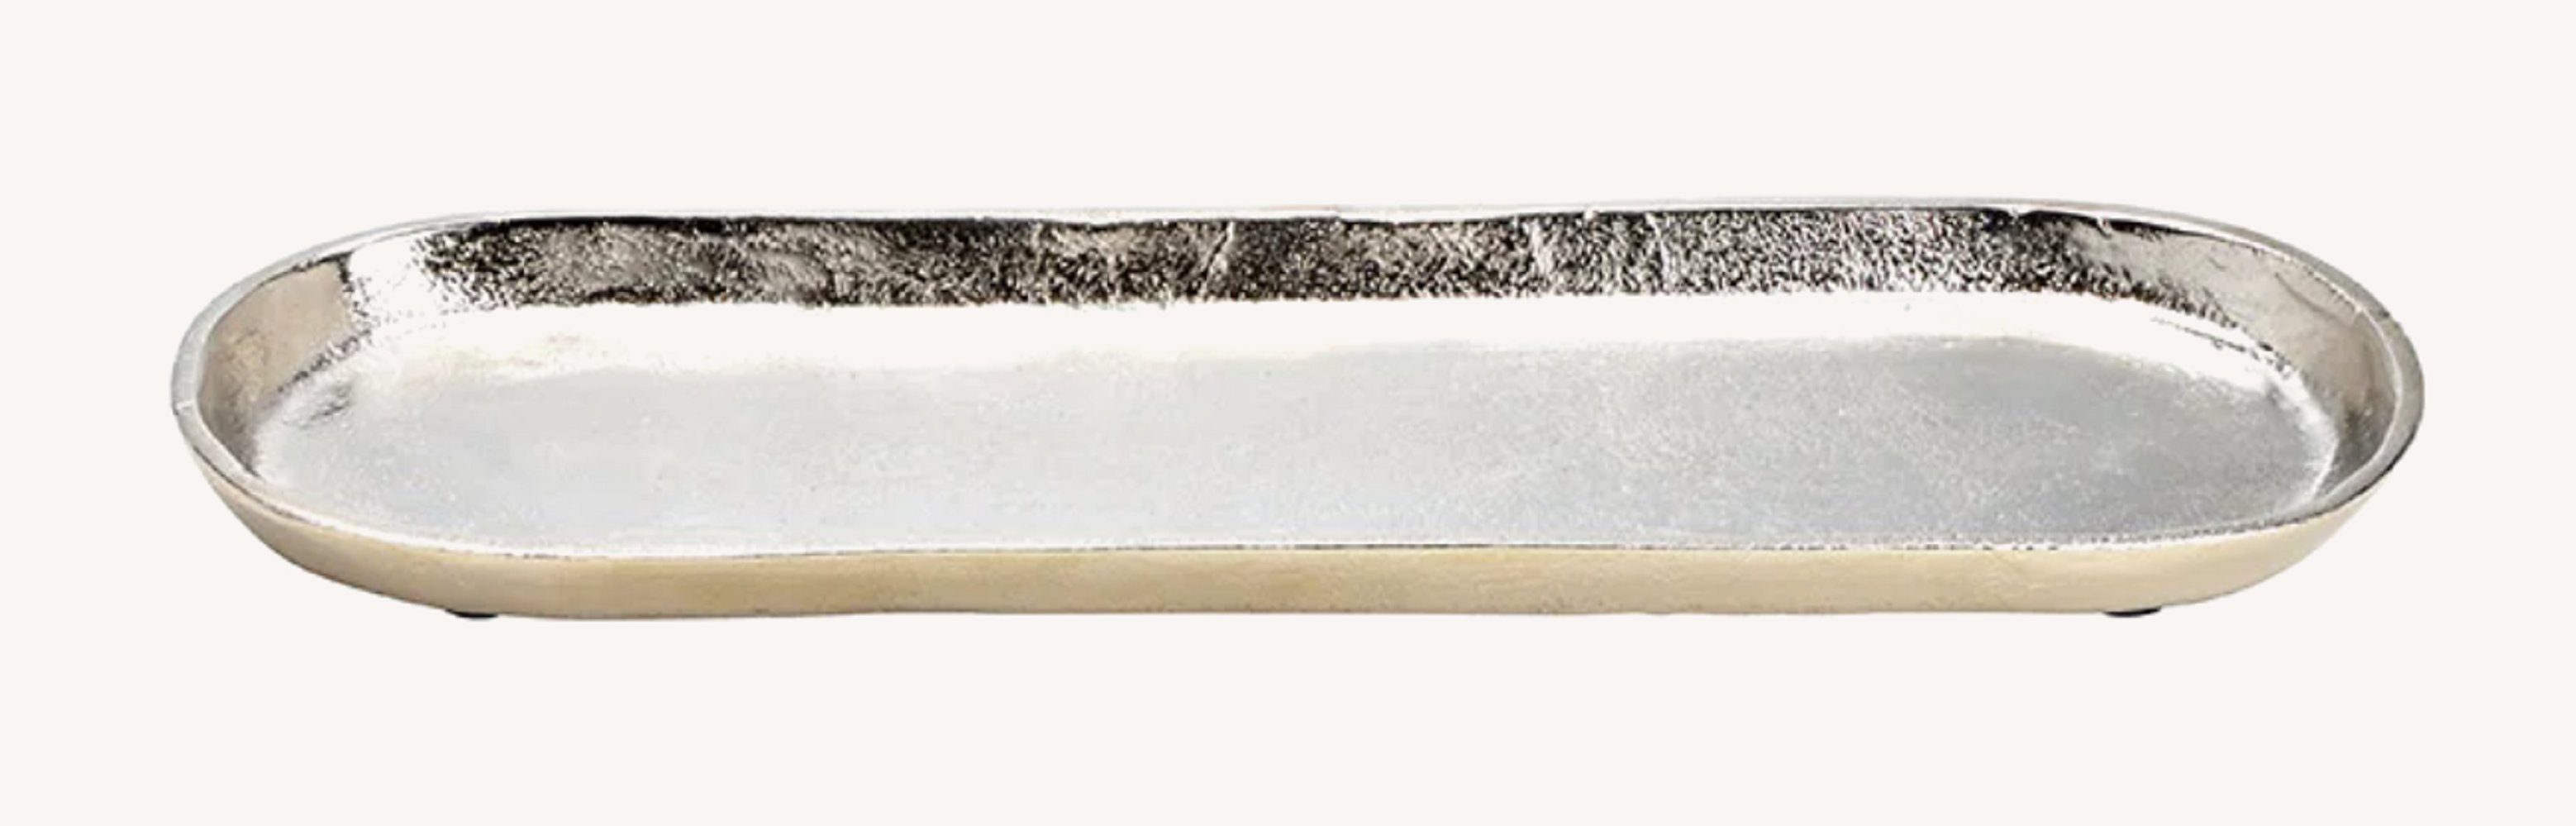 Meinposten Dekotablett Langes Tablett Dekoschale silber Metall massiv Tischdeko Deko Schale Dekotablett (1 St)